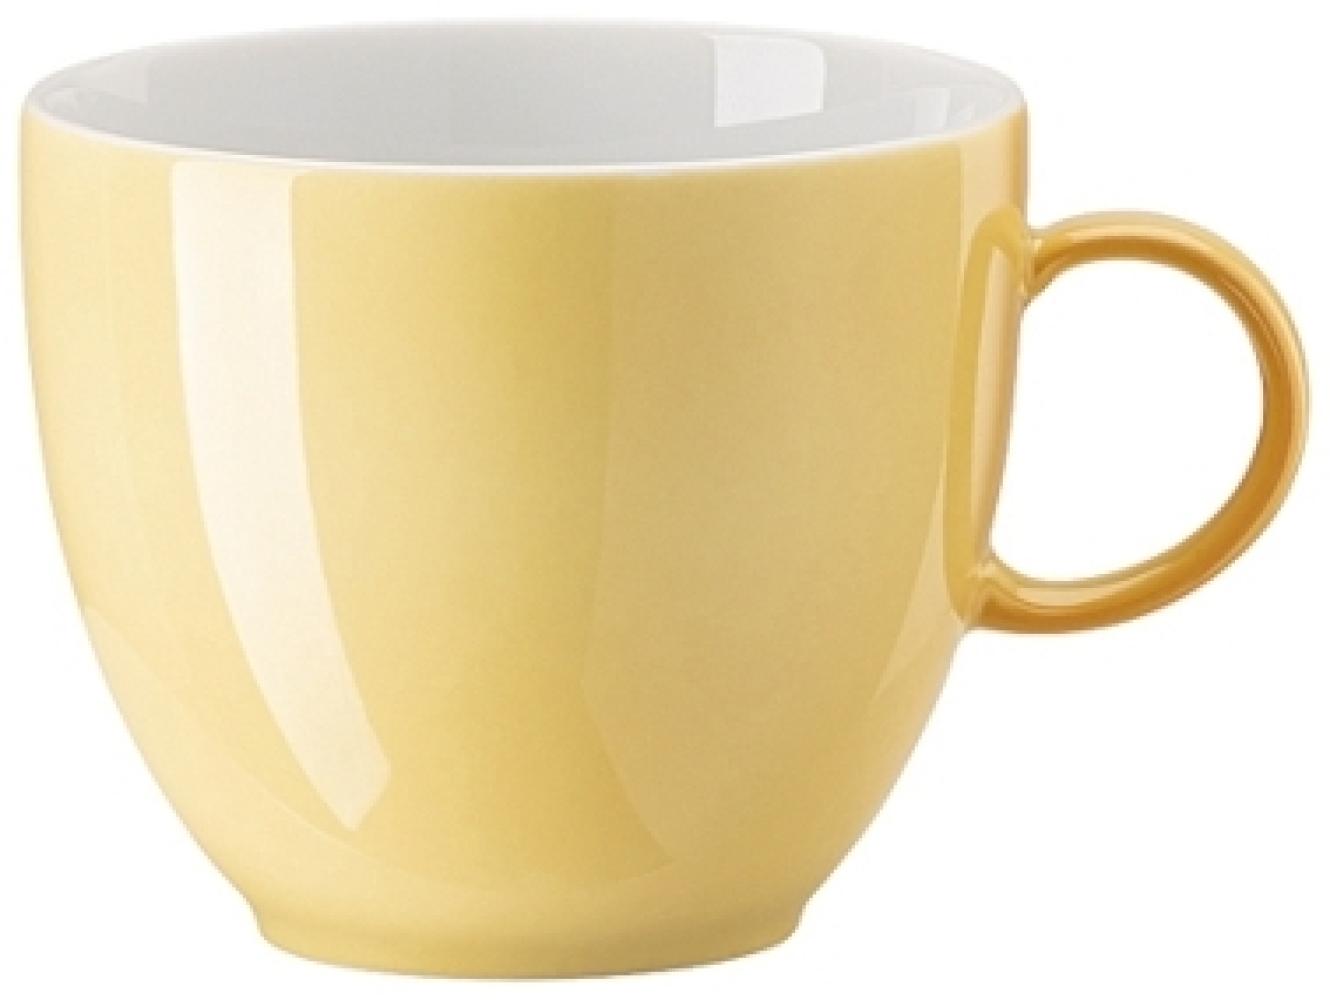 Thomas Kaffee-Obertasse Sunny Day Soft Yellow, Becher, Obere, Porzellan, Gelb, 200 ml, 10850-408549-14742 Bild 1